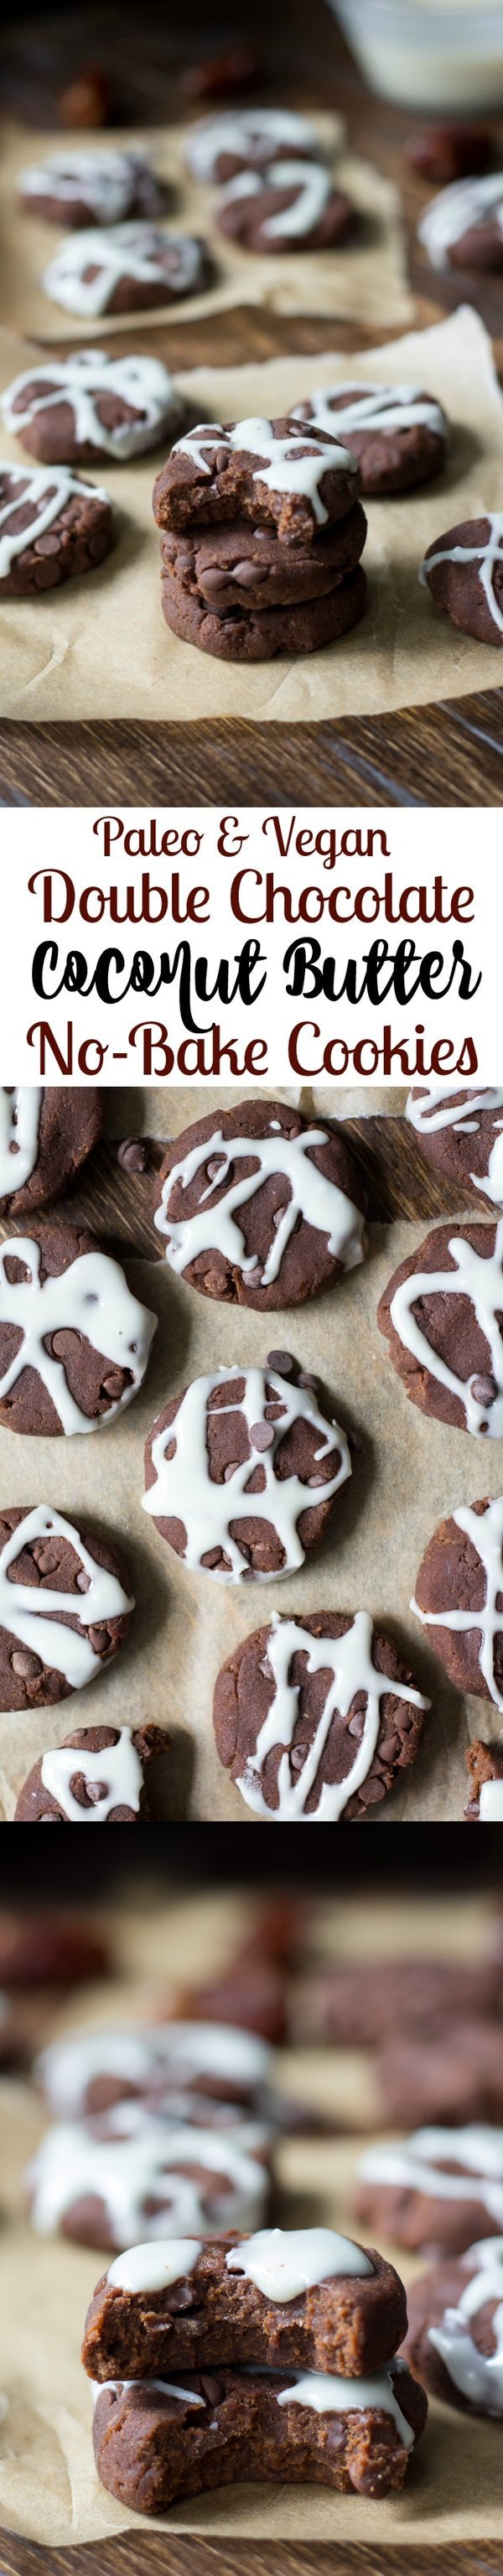 No Bake Chocolate Coconut Butter Cookies (Paleo & Vegan